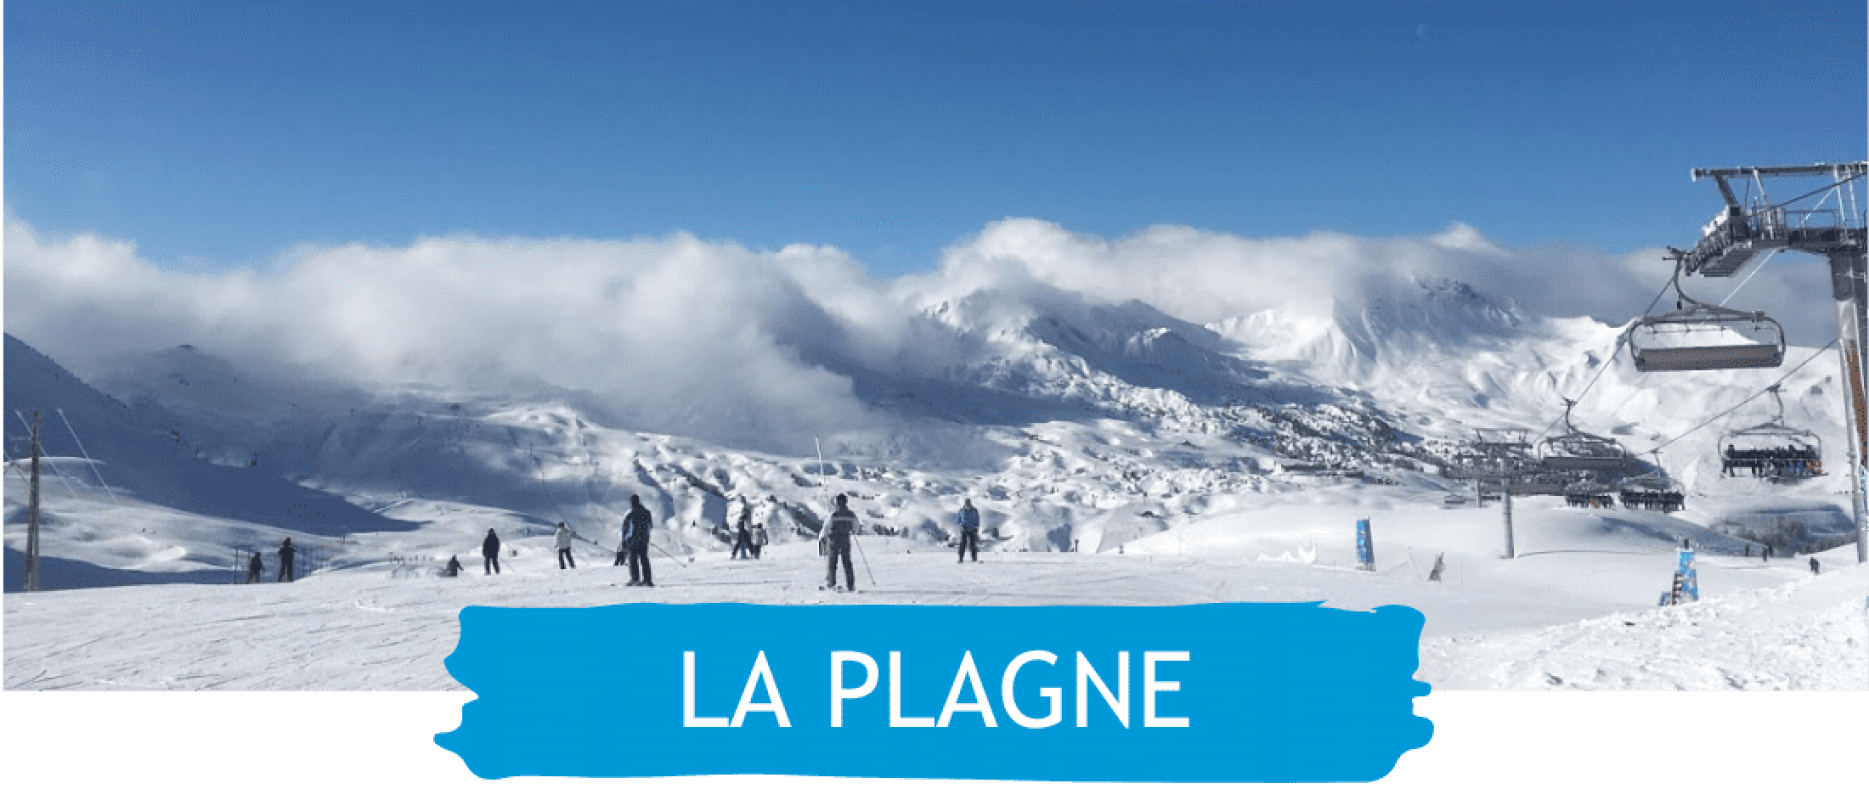 La Plagne 8 night Eurostar ski train package